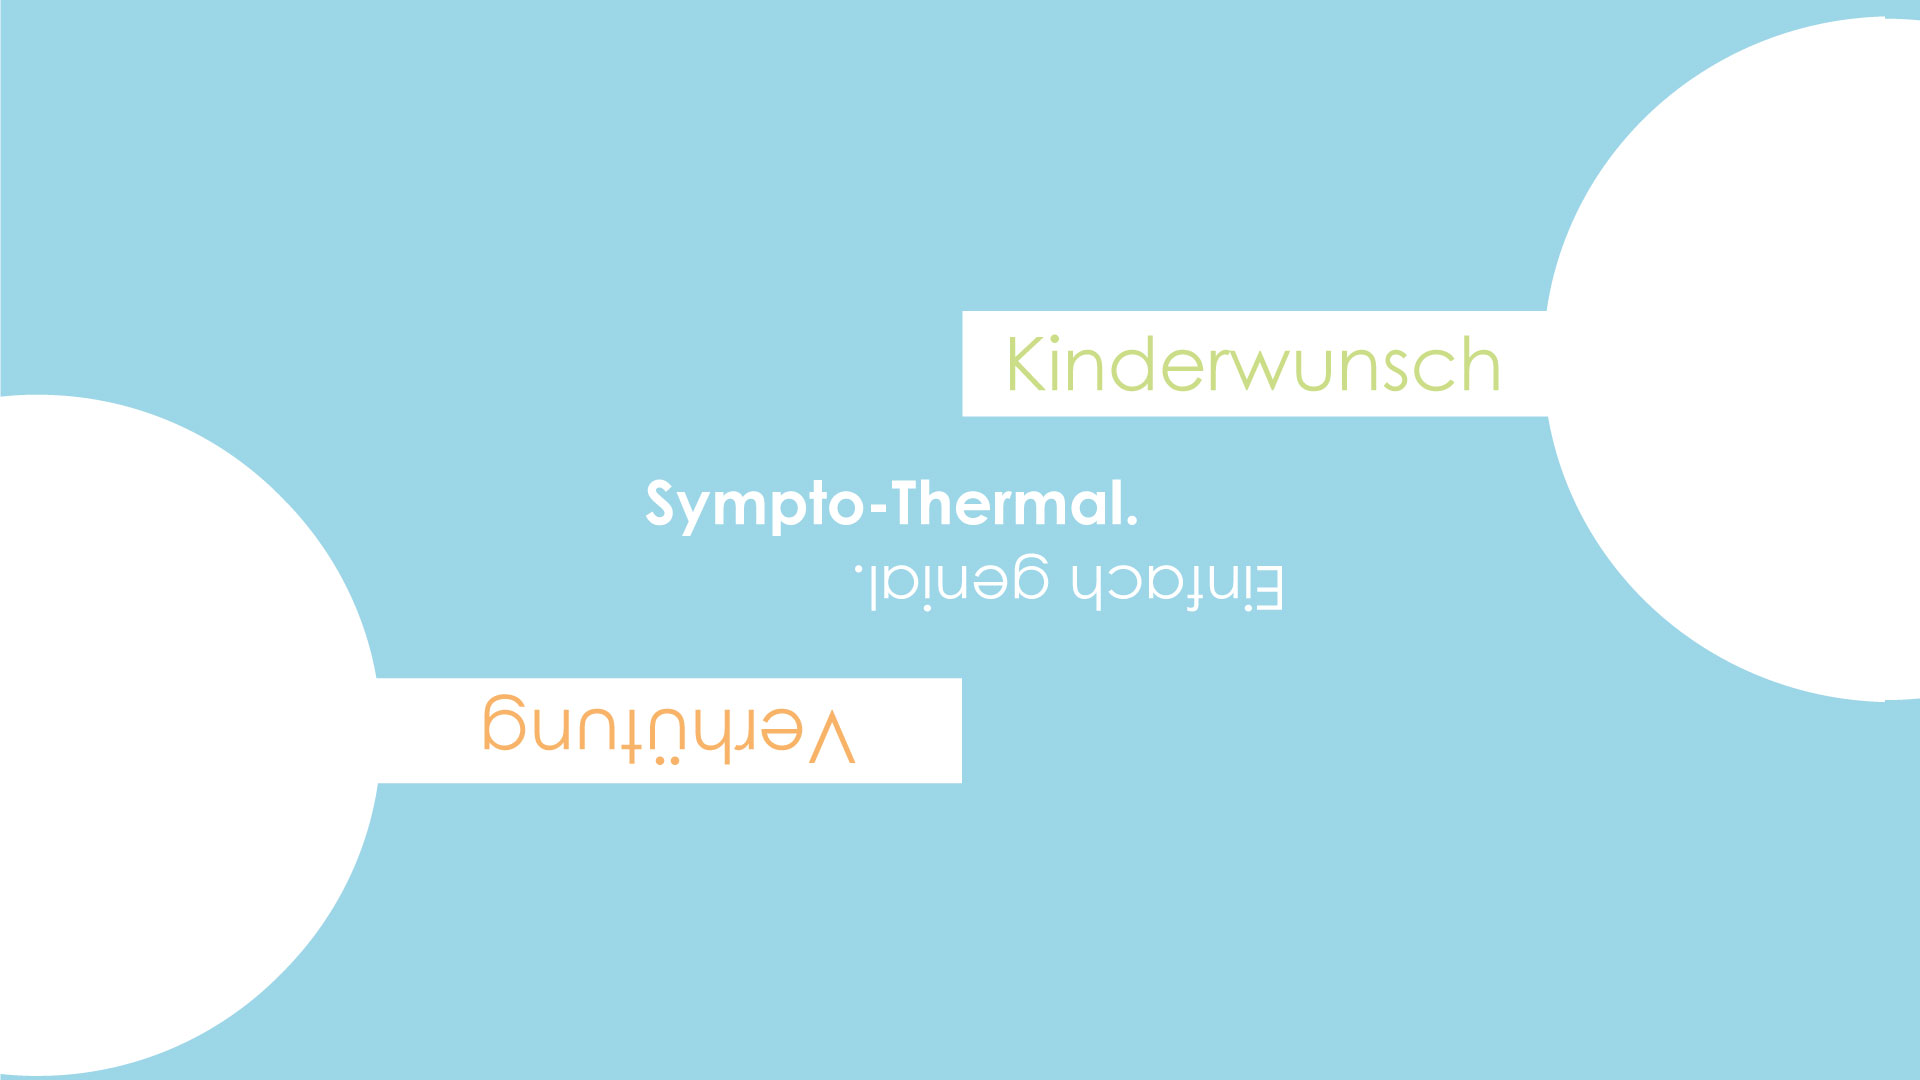 Sympto-thermal - einfach genial